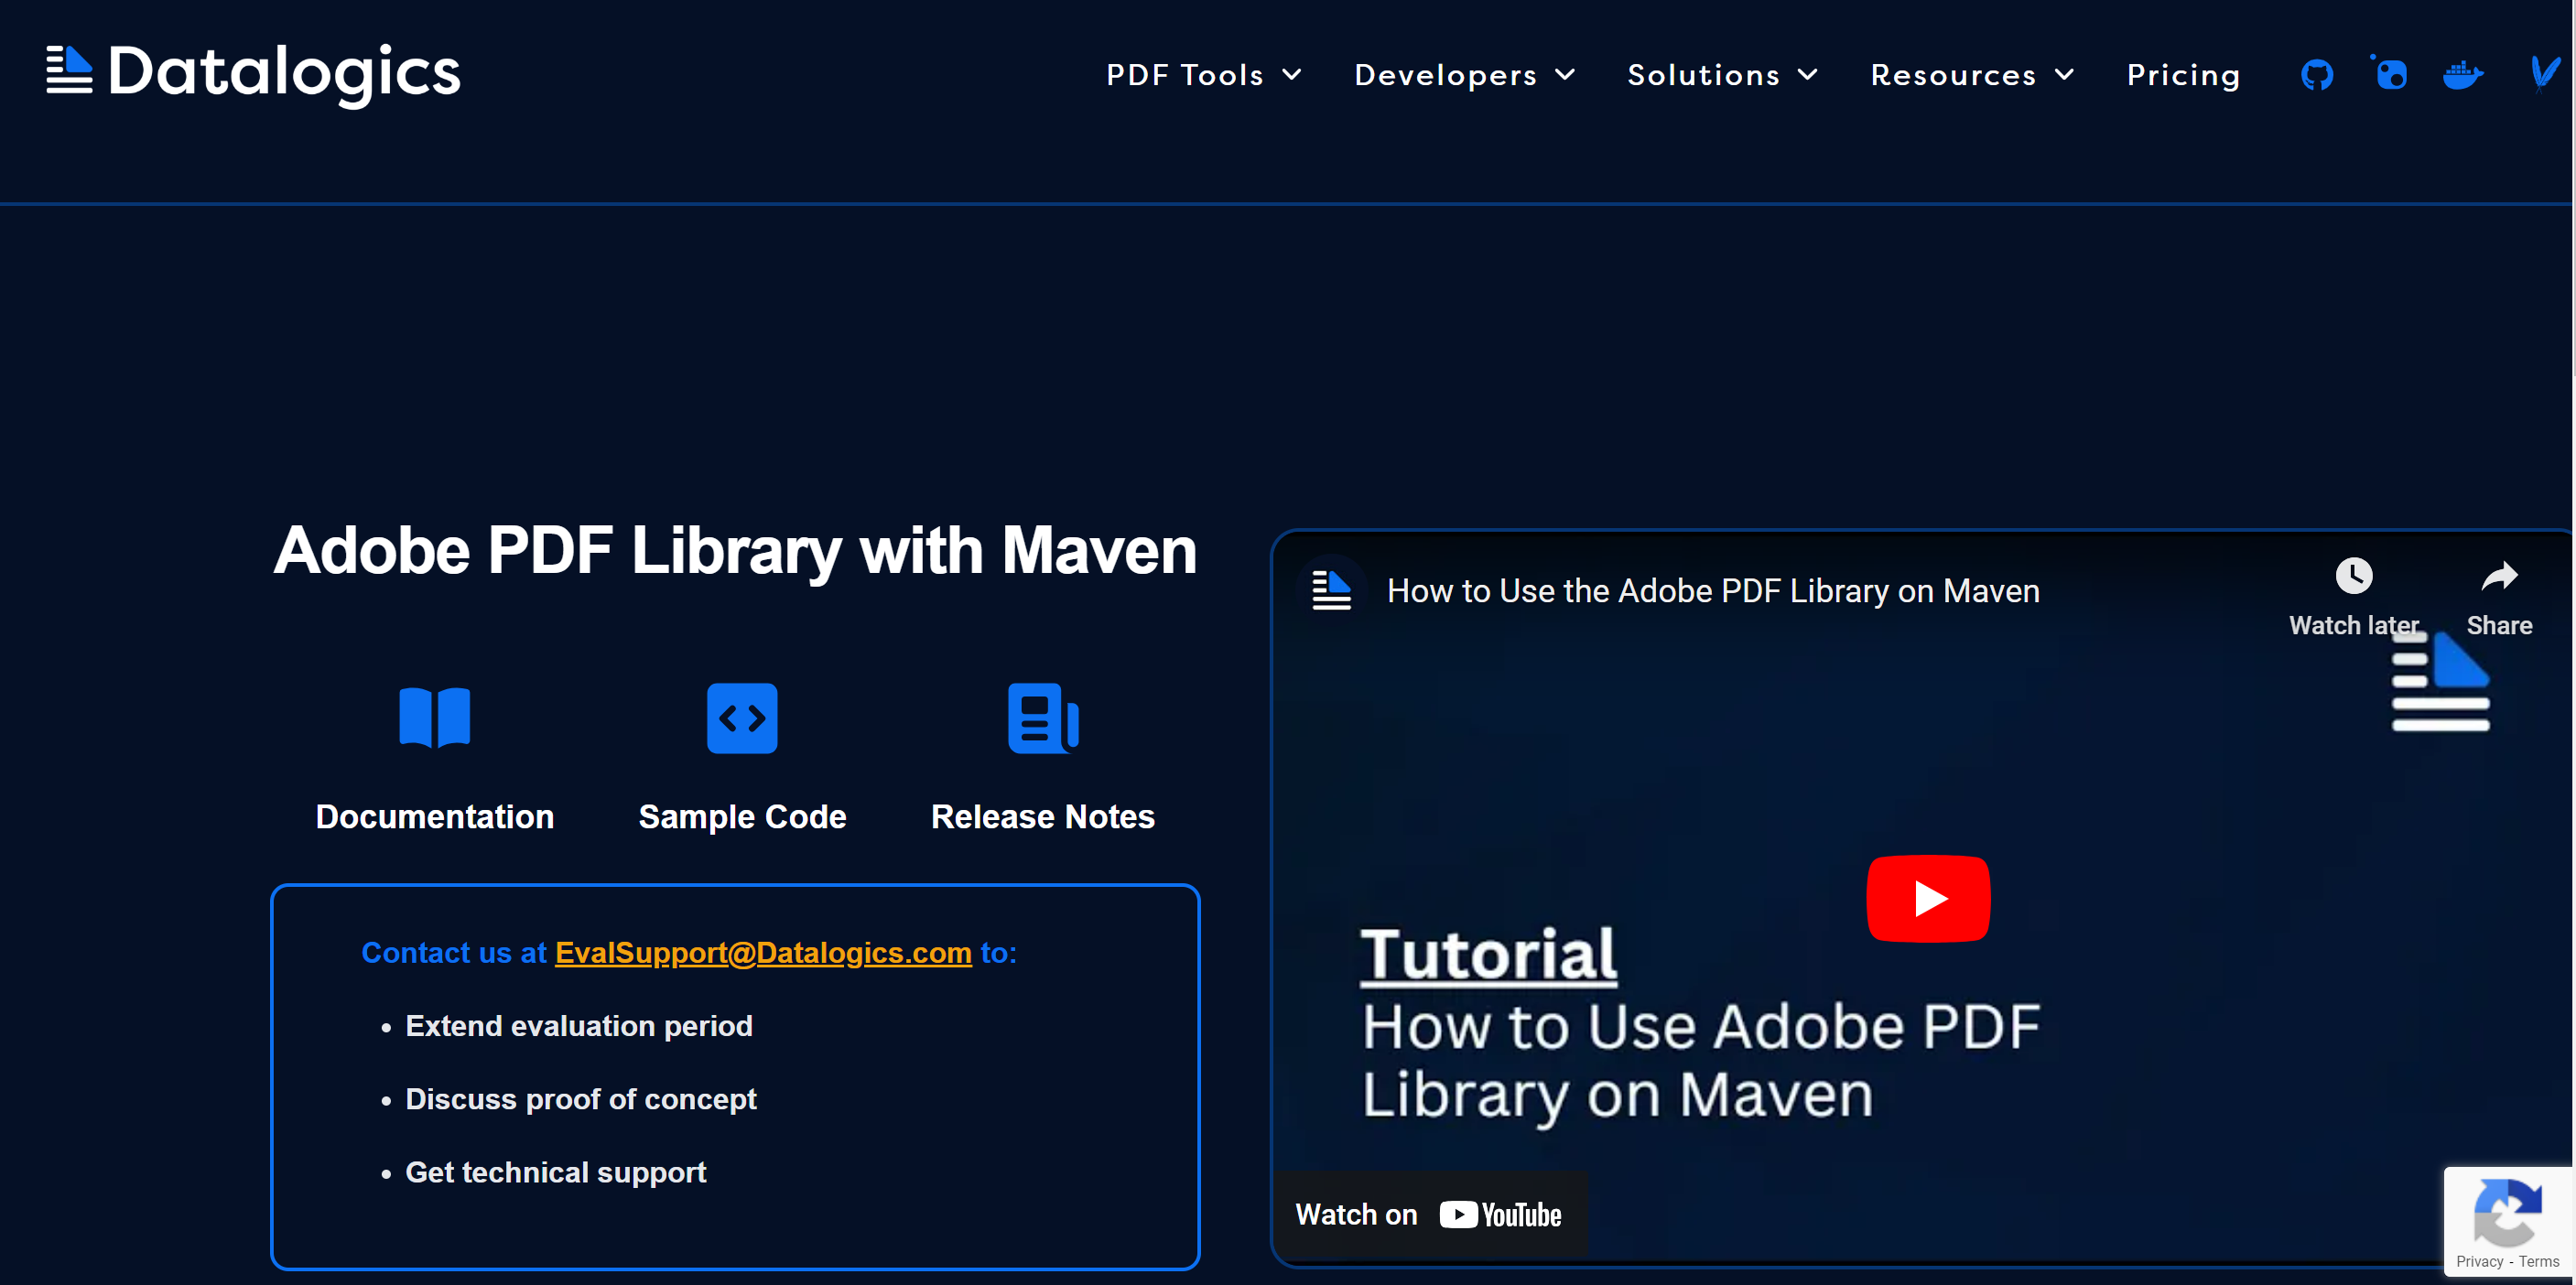 Adobe PDF Library - Maven Tutorial & Get Started